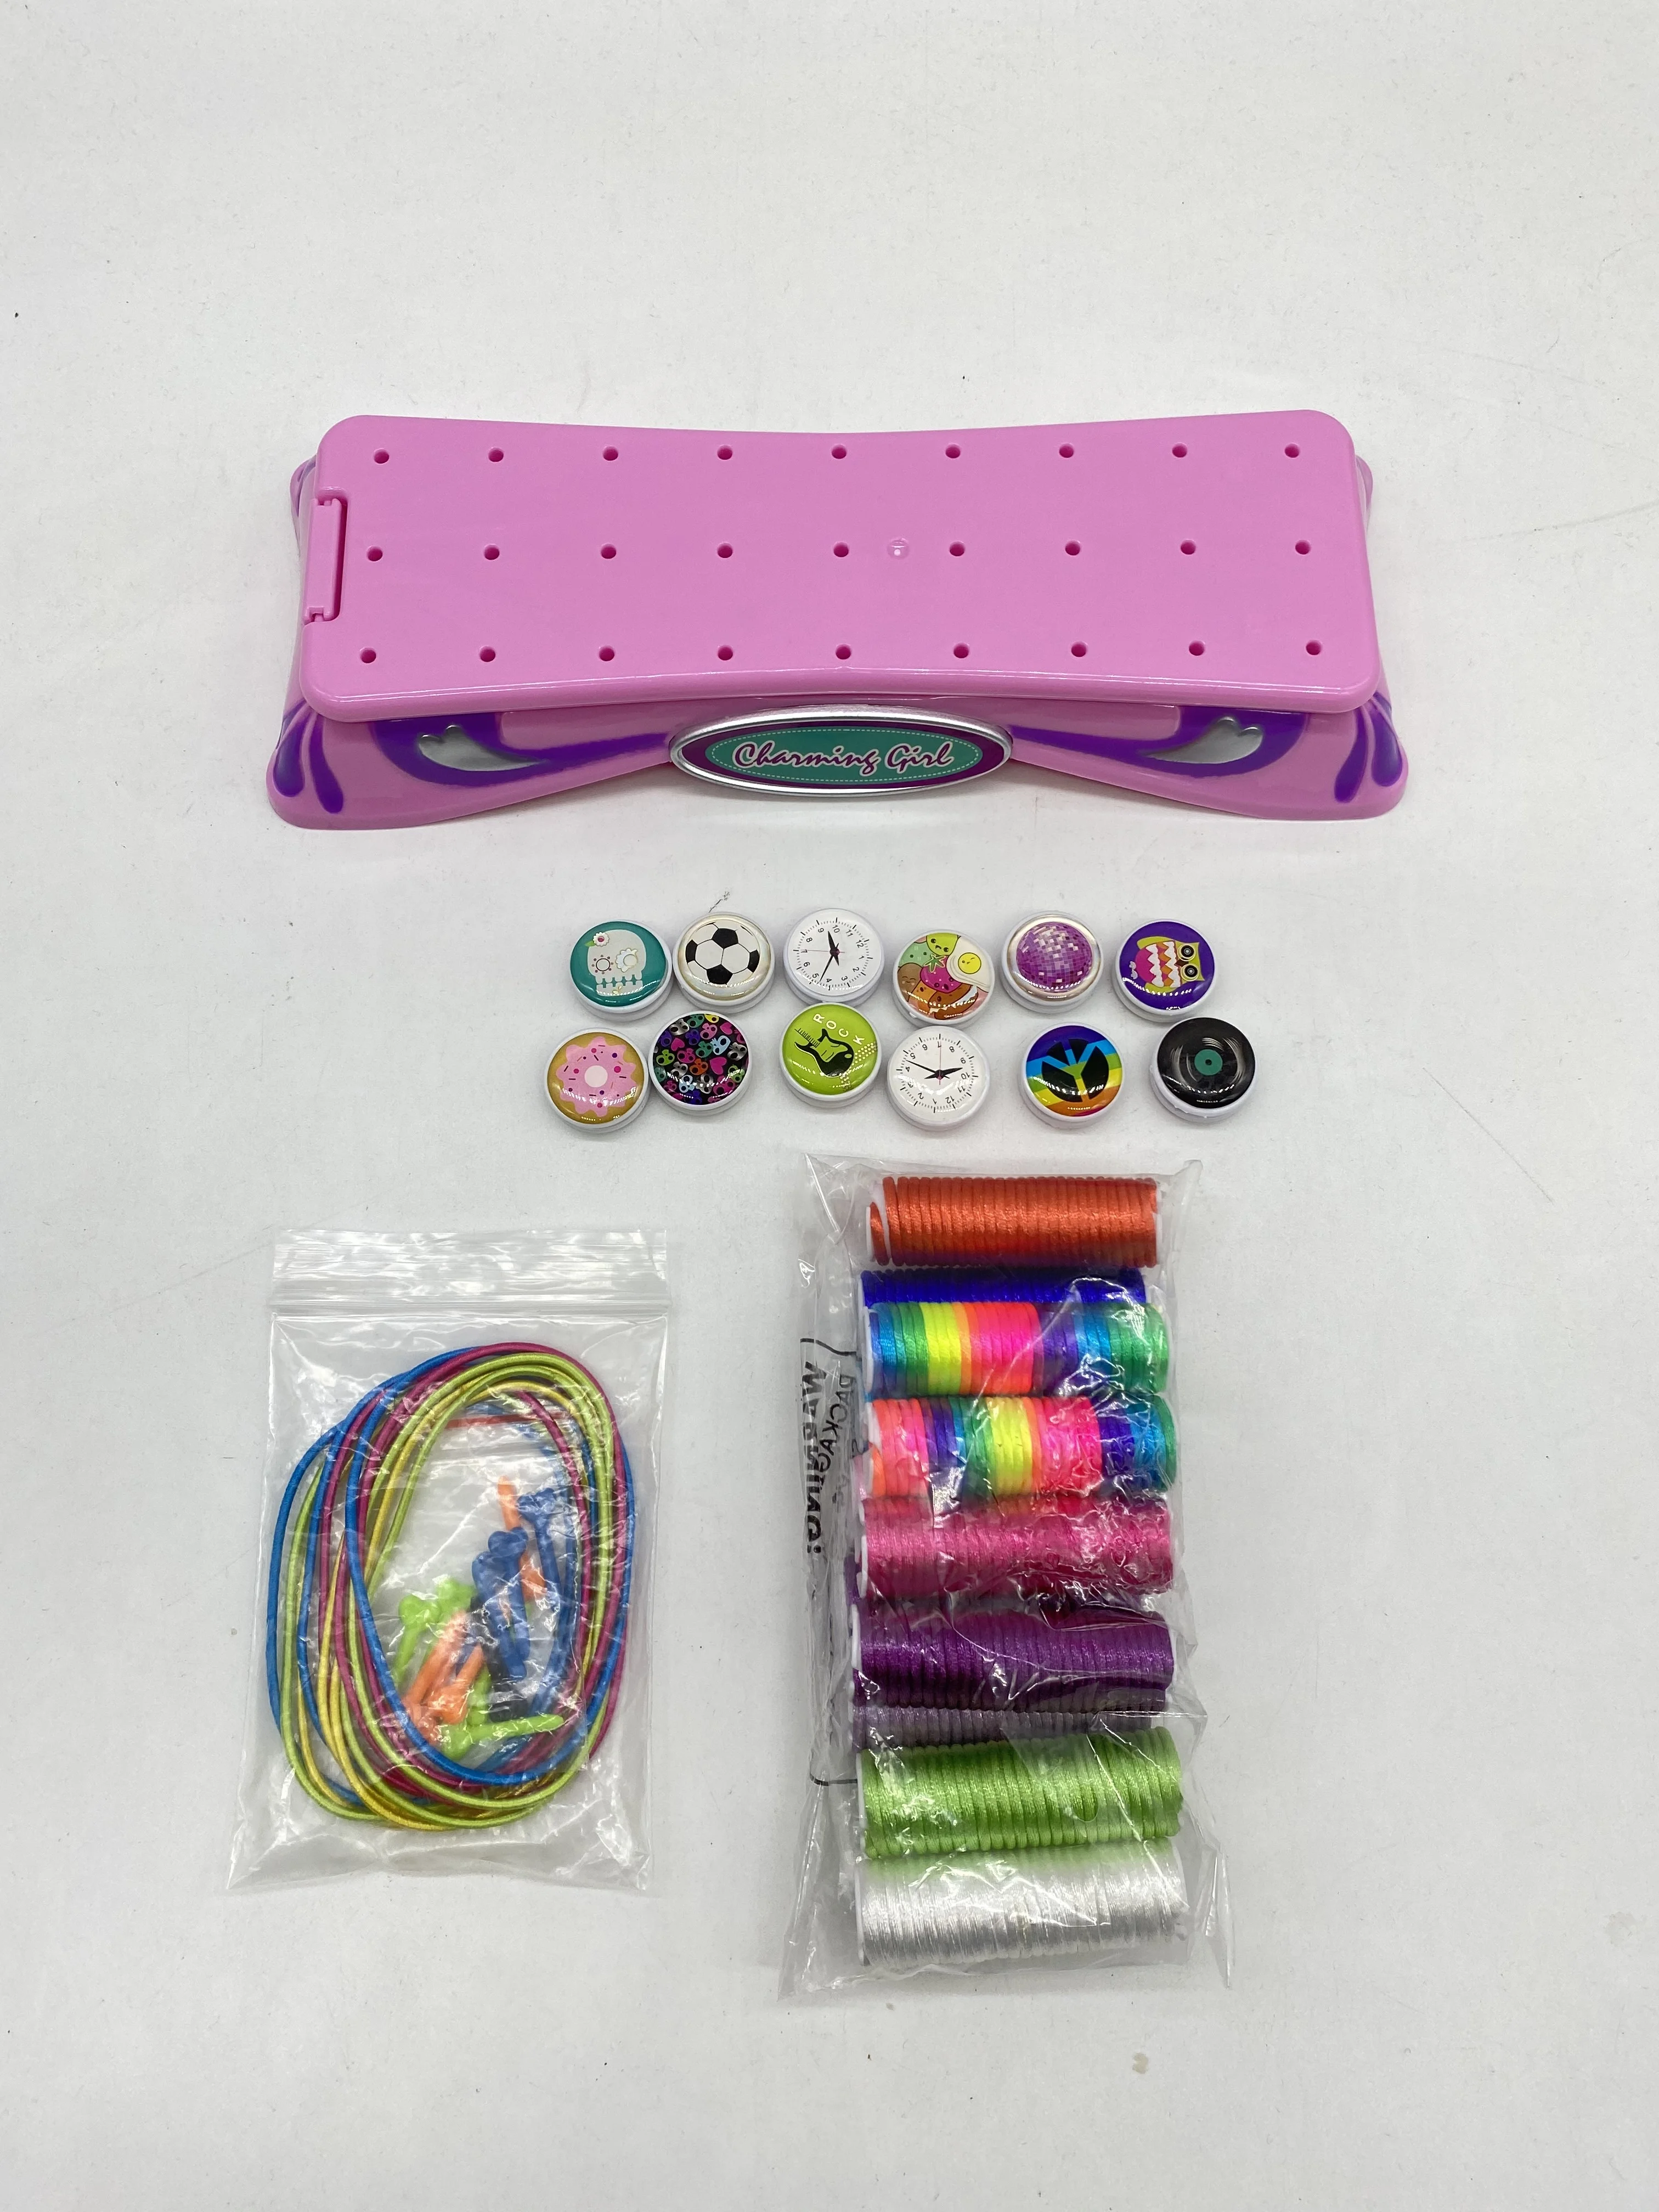 IQKidz Friendship Bracelet Maker Kit - Making Bracelets craft Toys